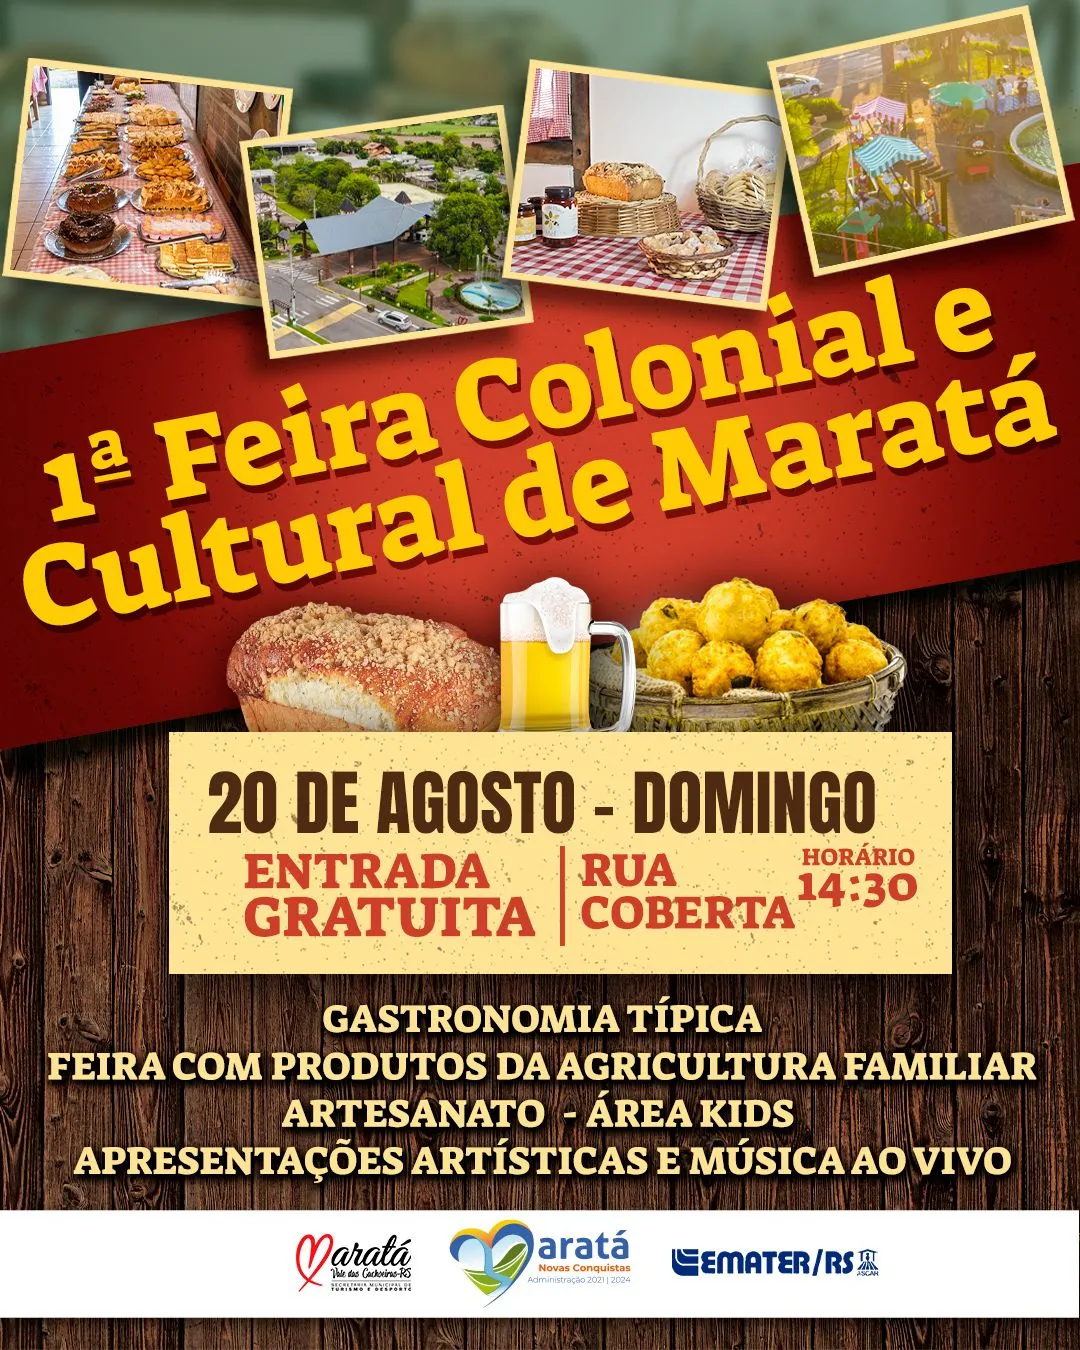 Junte-se a nós na 1° Feira Colonial e Cultural de Maratá! 